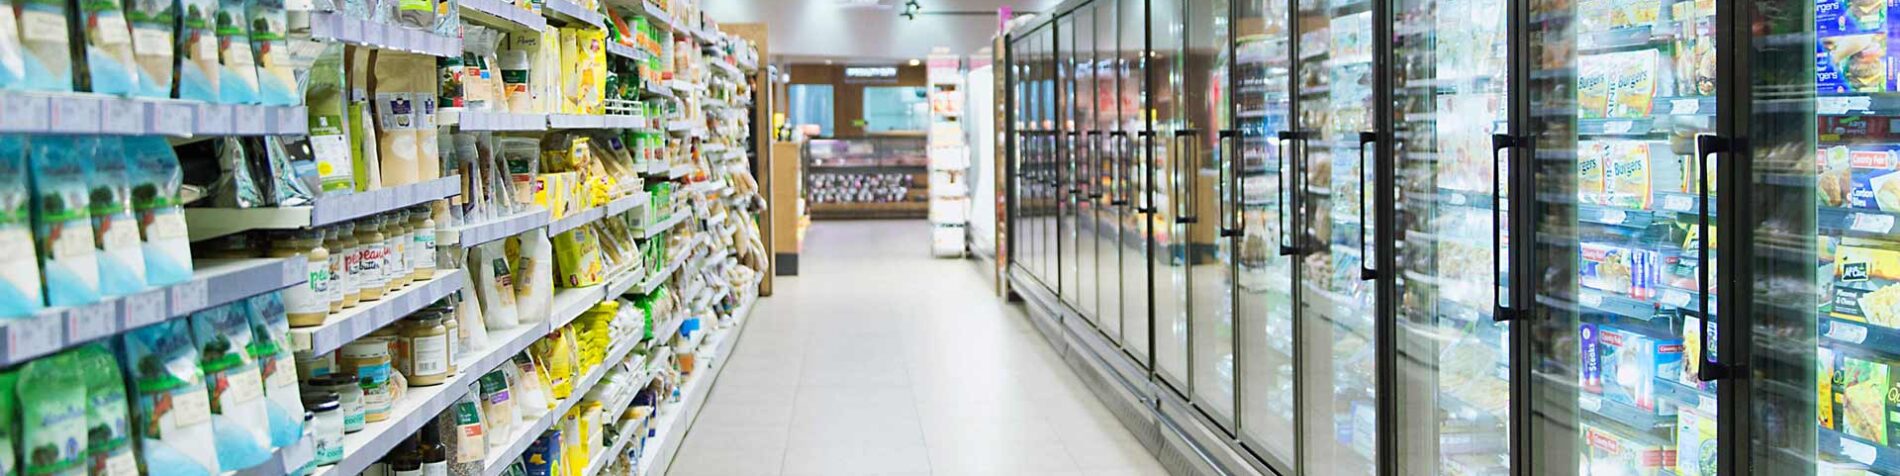 Keep Your Refrigerator Running with SAP Leonardo for Retail